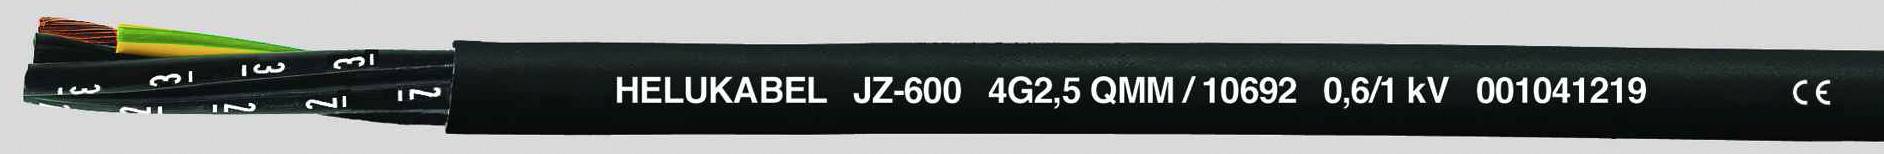 HELUKABEL JZ-600 Steuerleitung 10 G 1 mm² Schwarz 10628-1000 1000 m